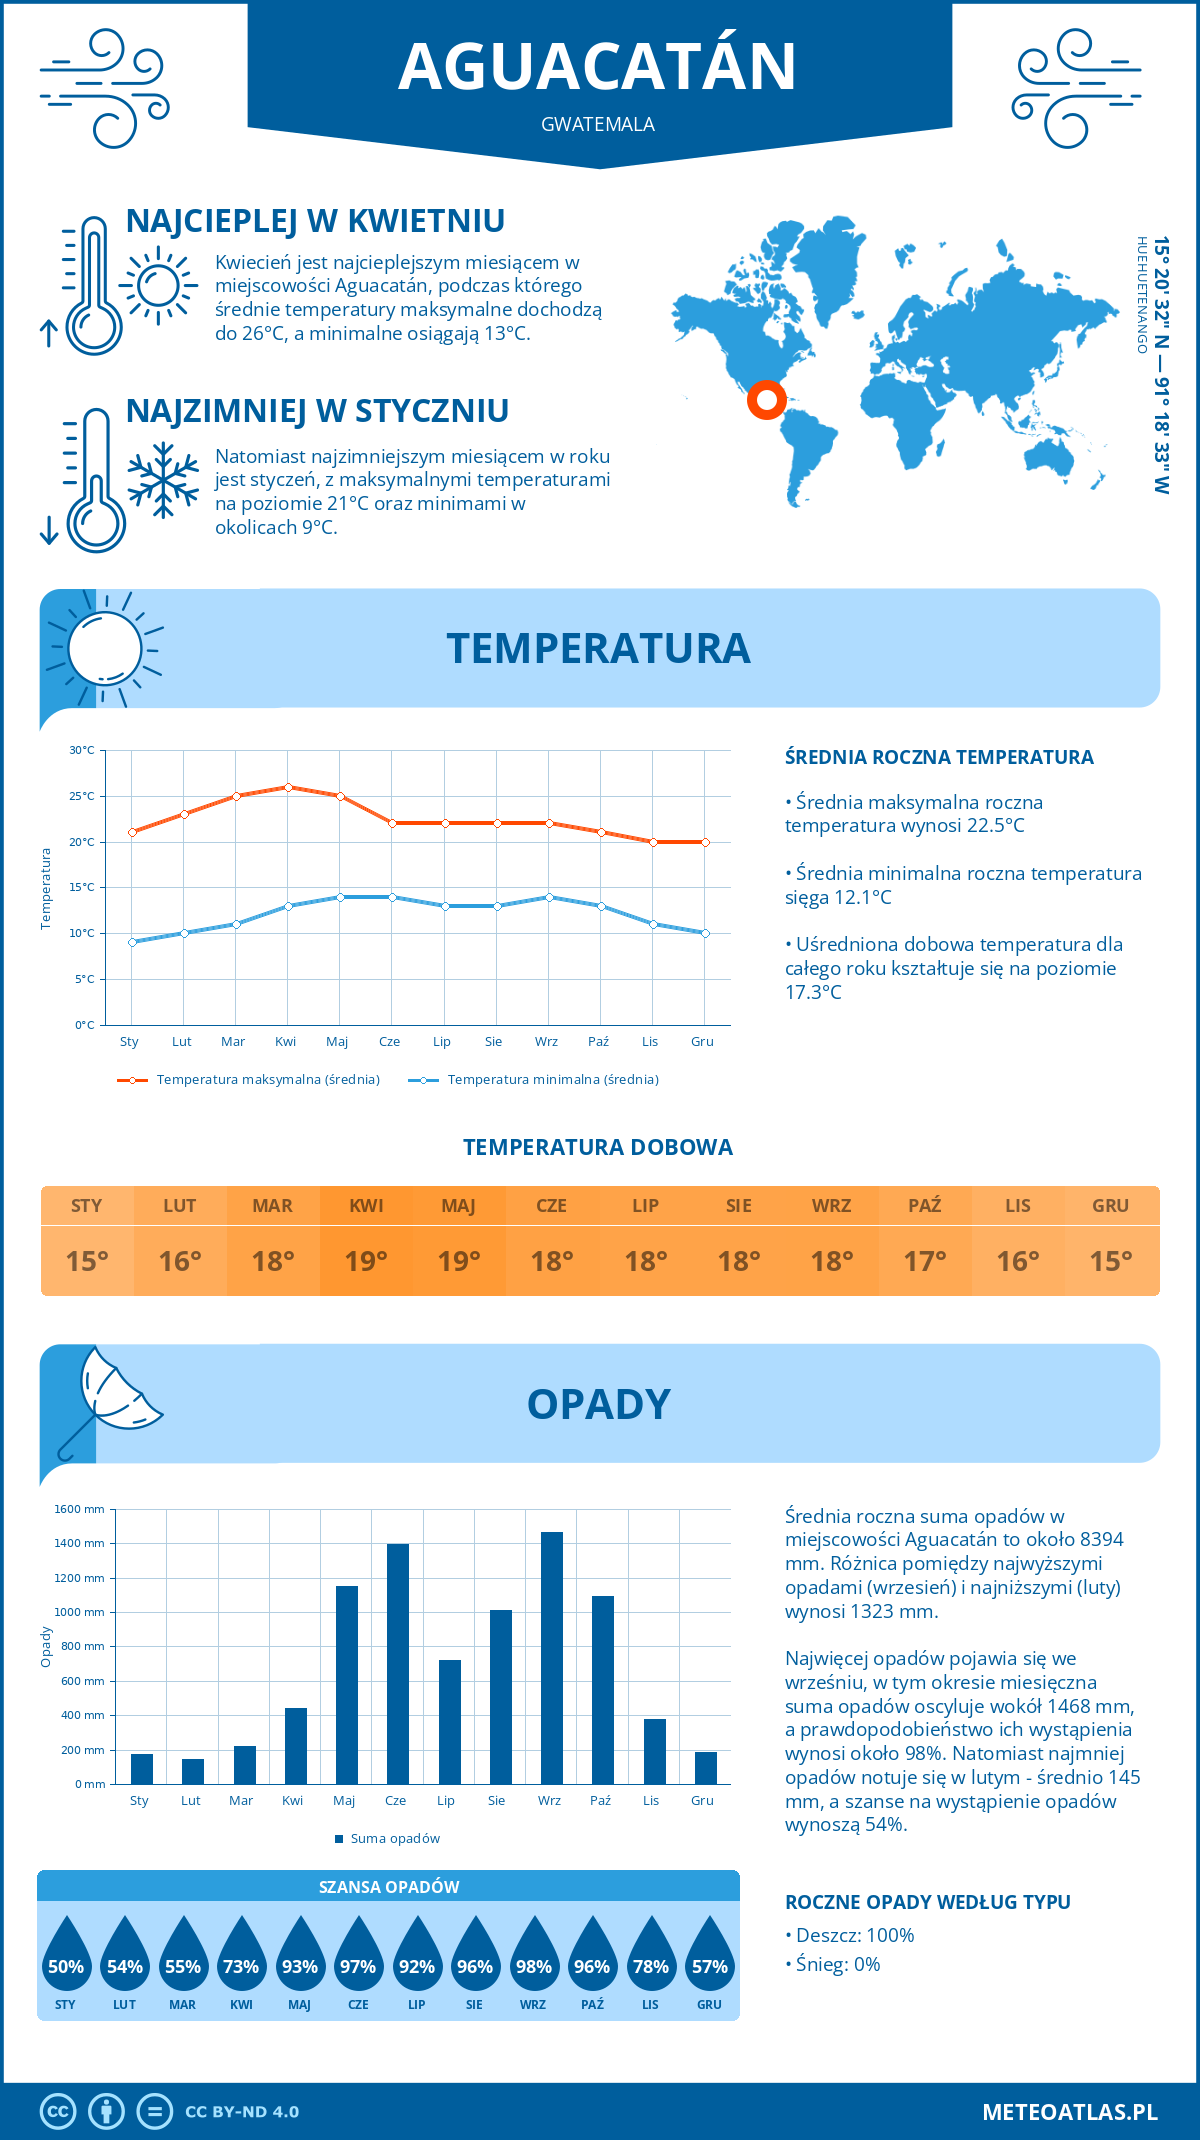 Pogoda Aguacatán (Gwatemala). Temperatura oraz opady.